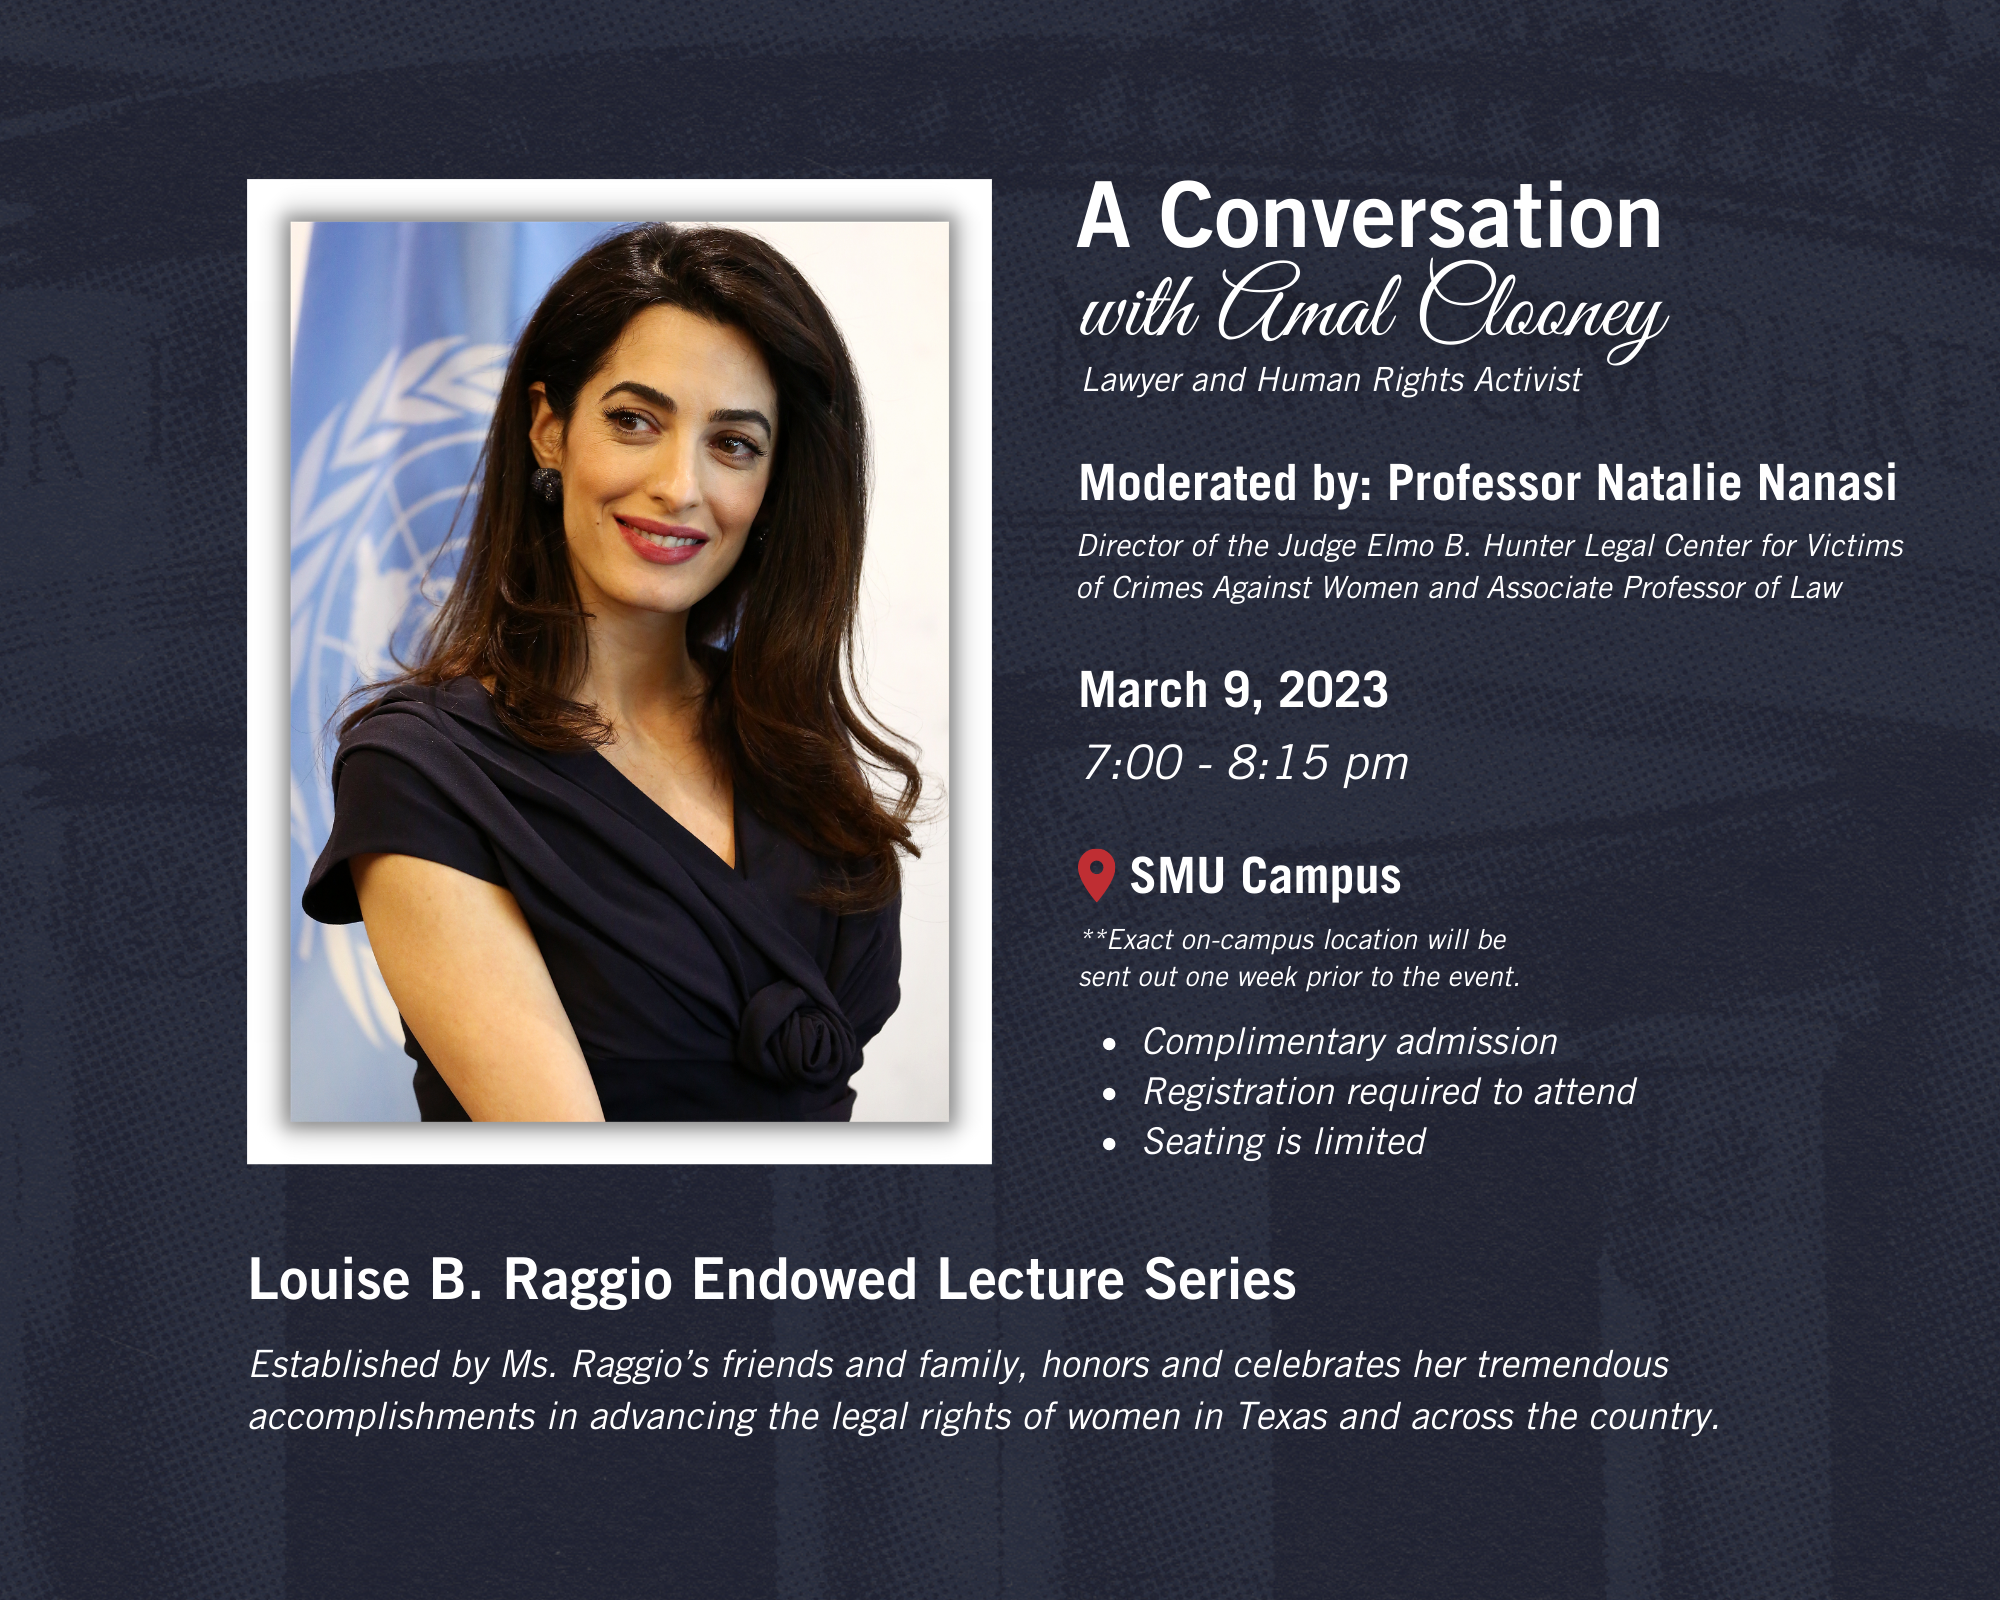 Dedman School of Law - 2023 Louise B. Raggio Endowed Lecture: A